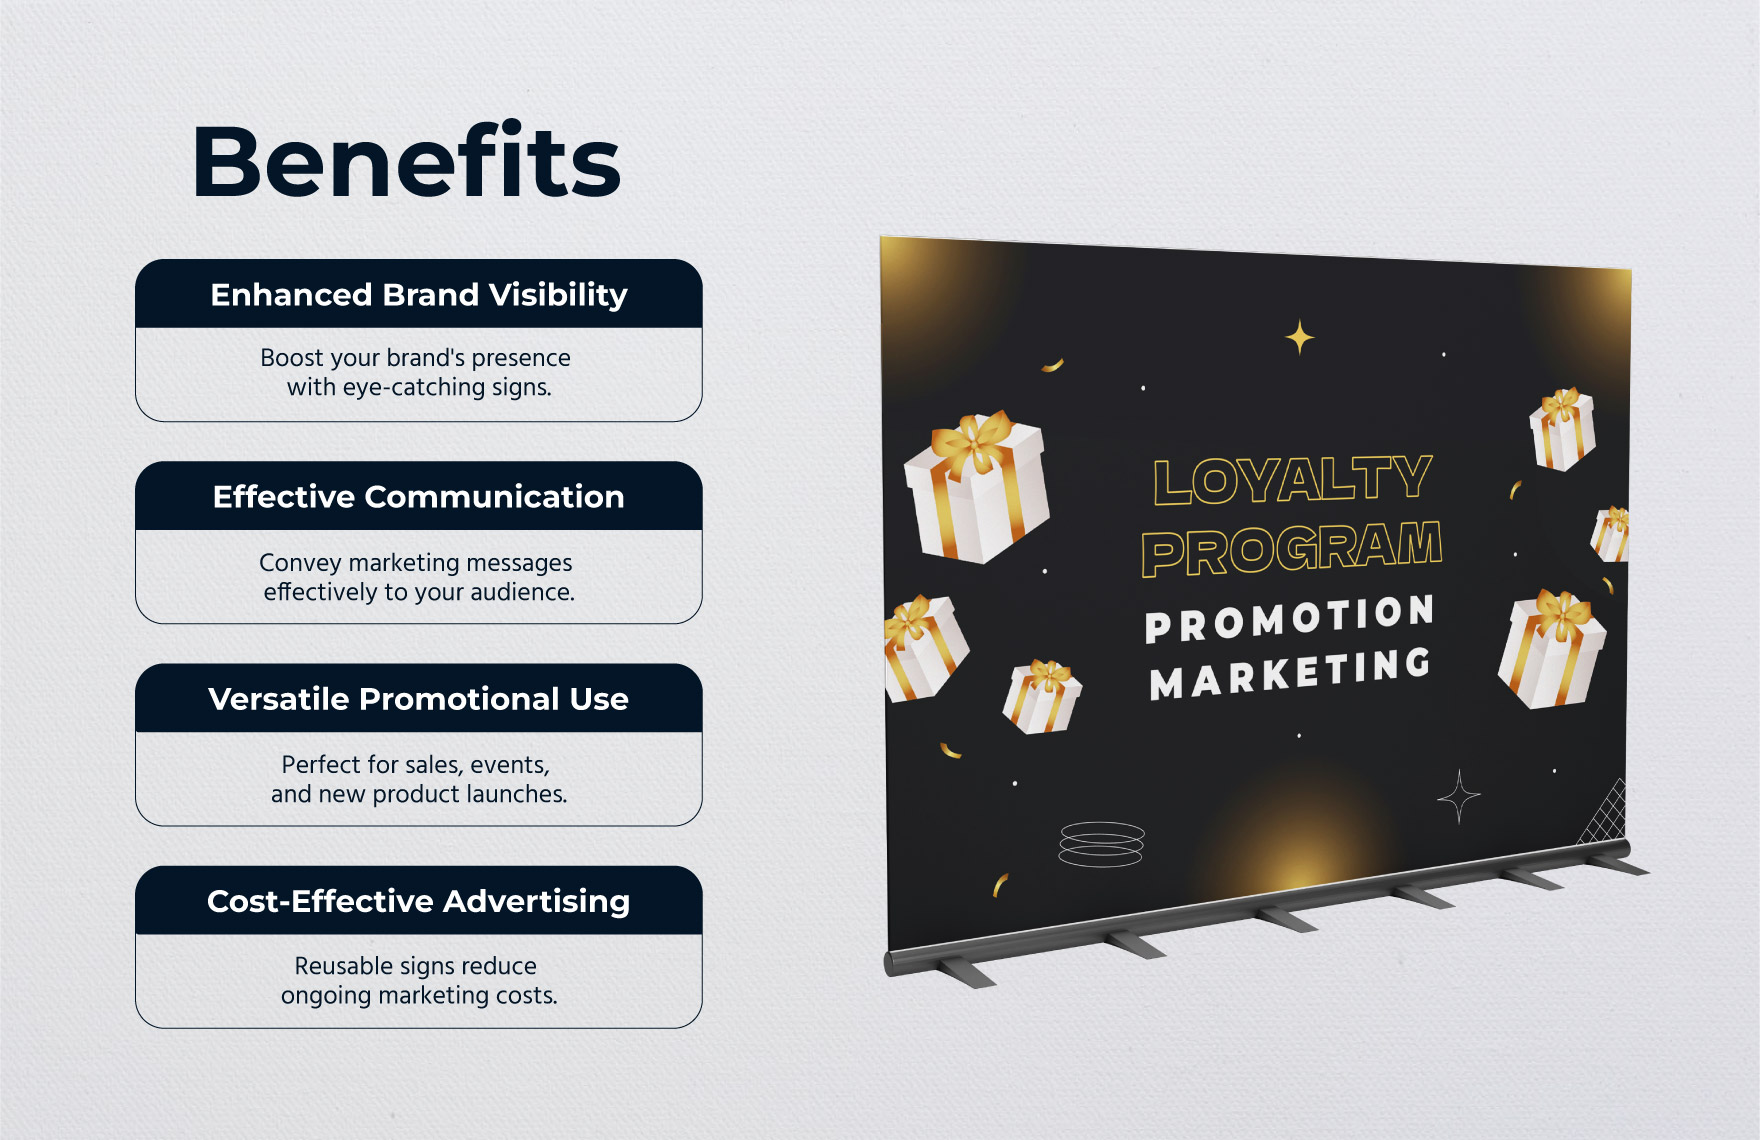 Loyalty Program Promotion Marketing Sign Template